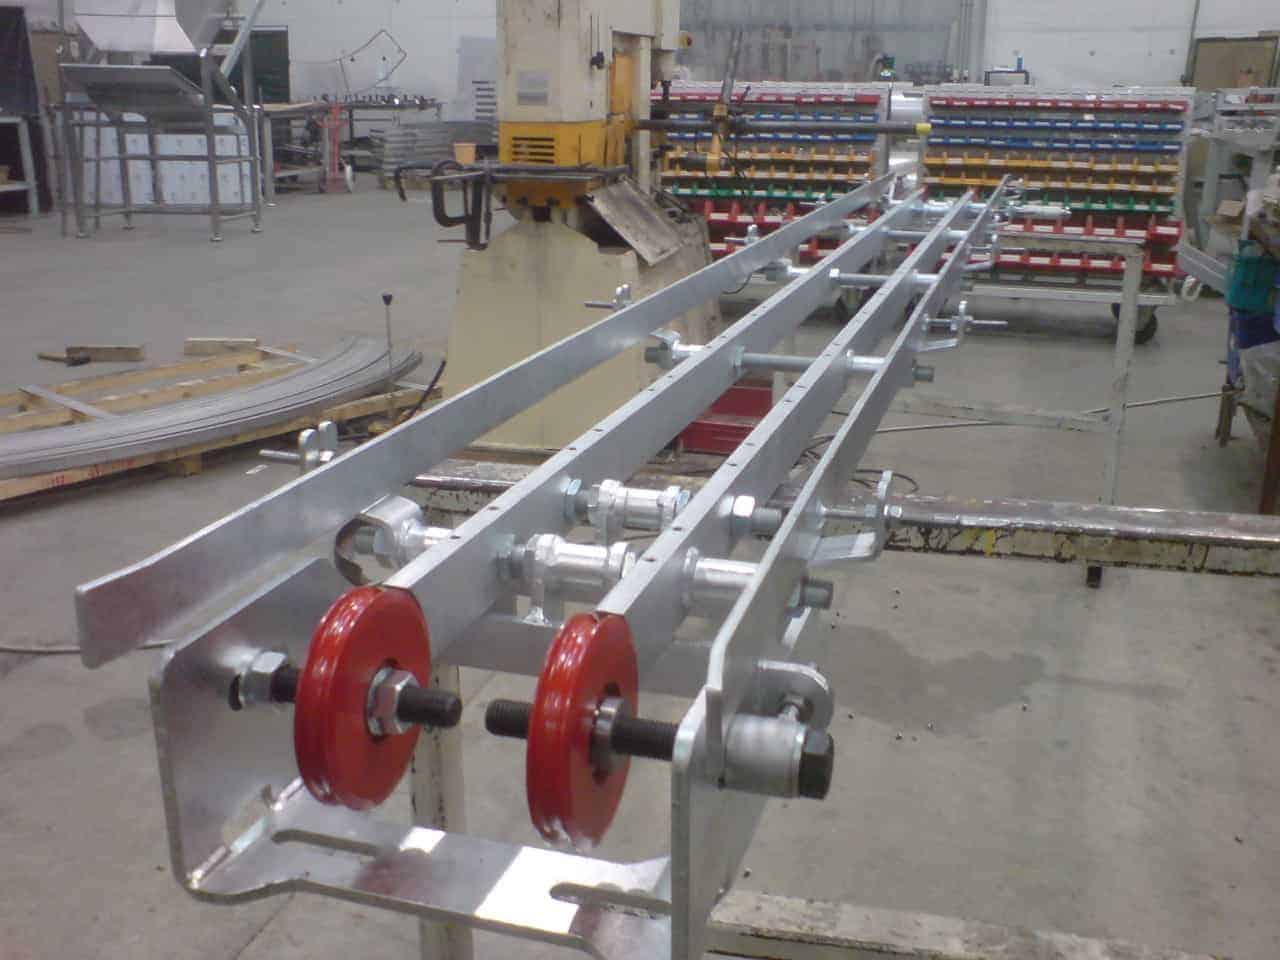 stainless steel conveyors